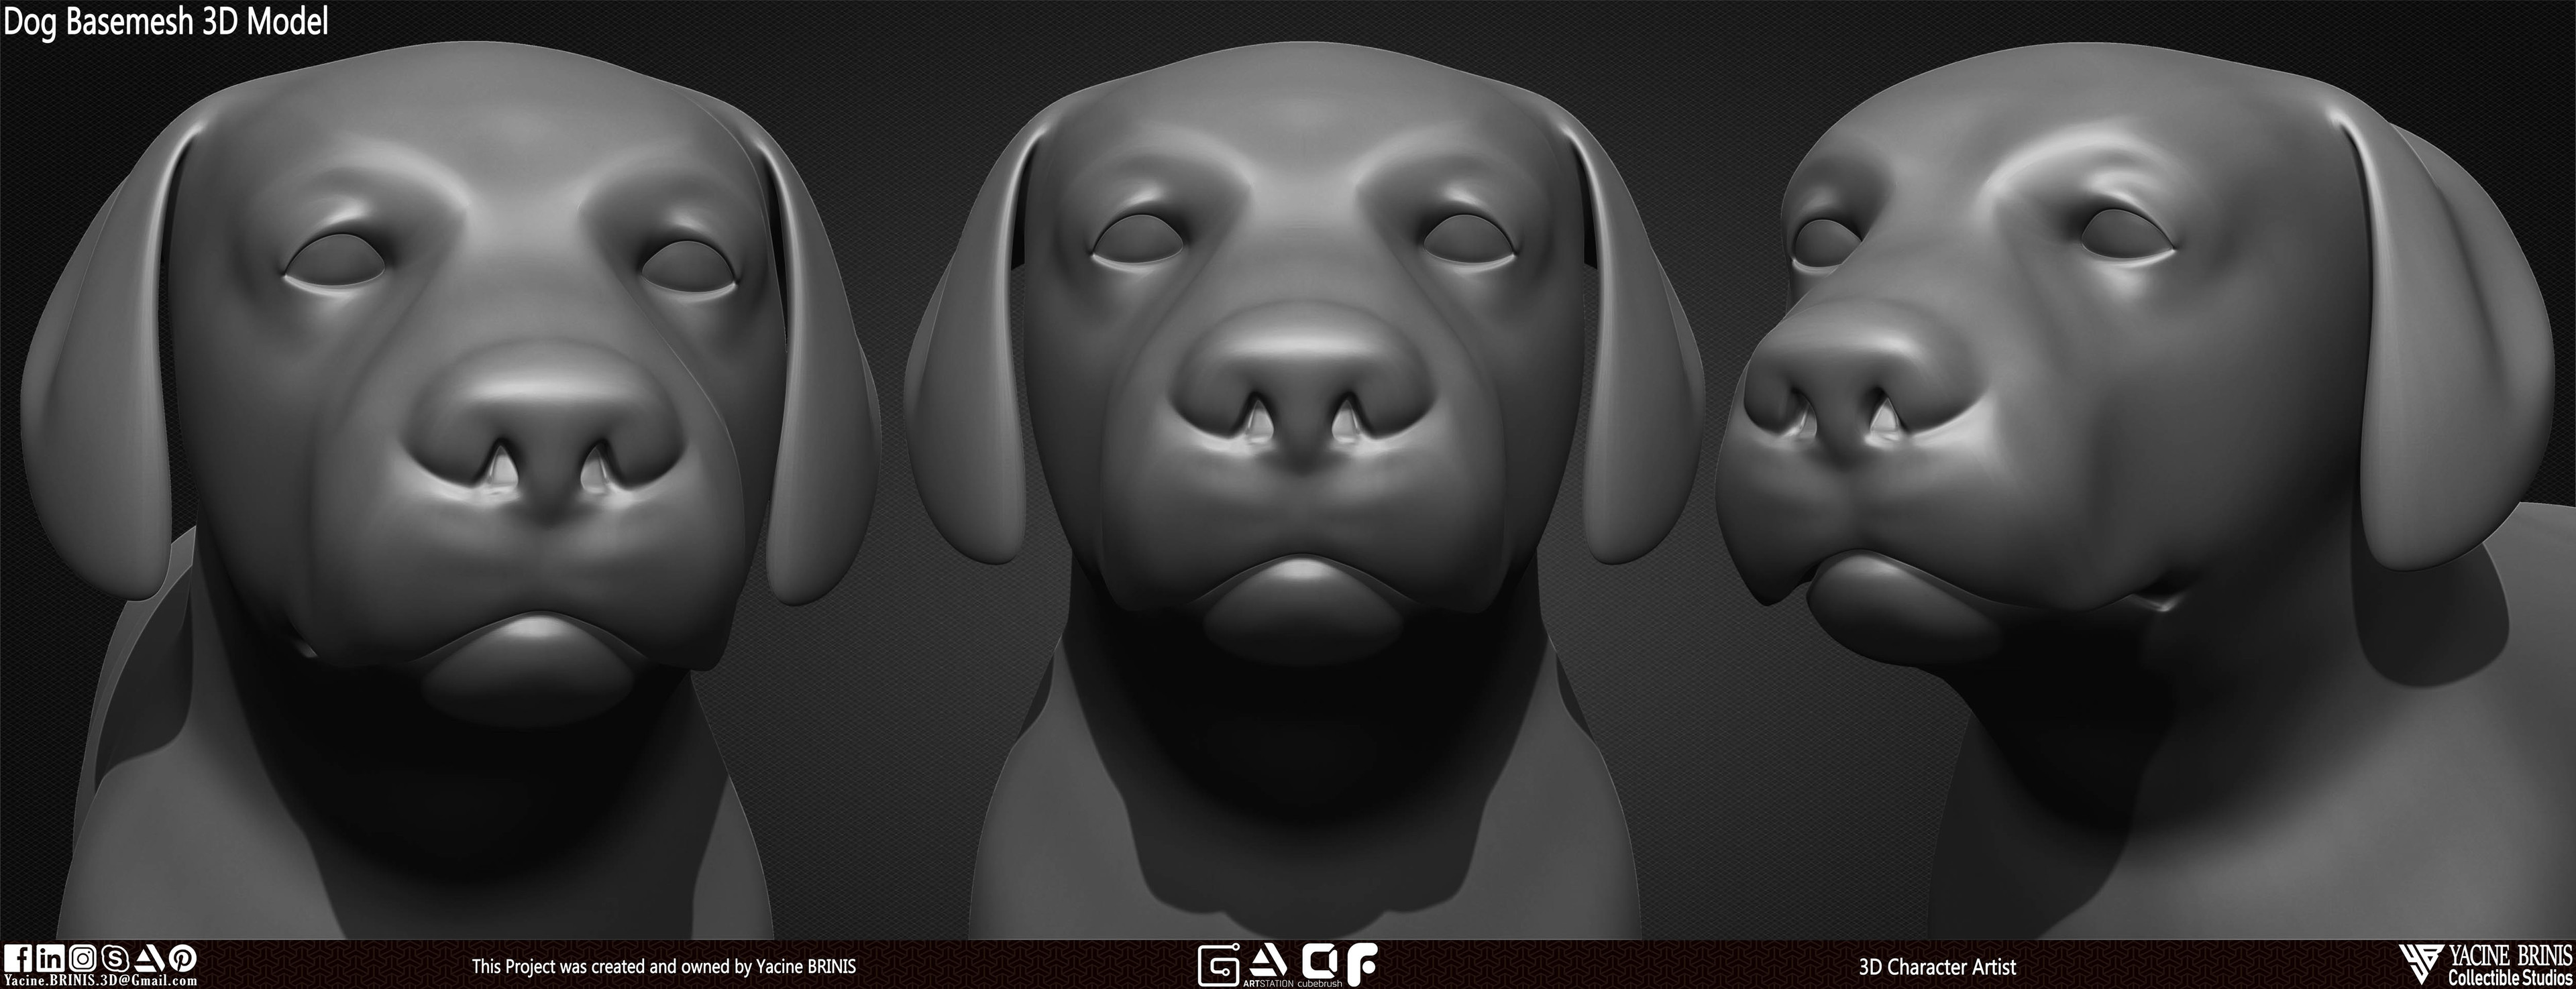 Dog Basemesh 3D Model Vol 01 sculpted By Yacine BRINIS Set 007